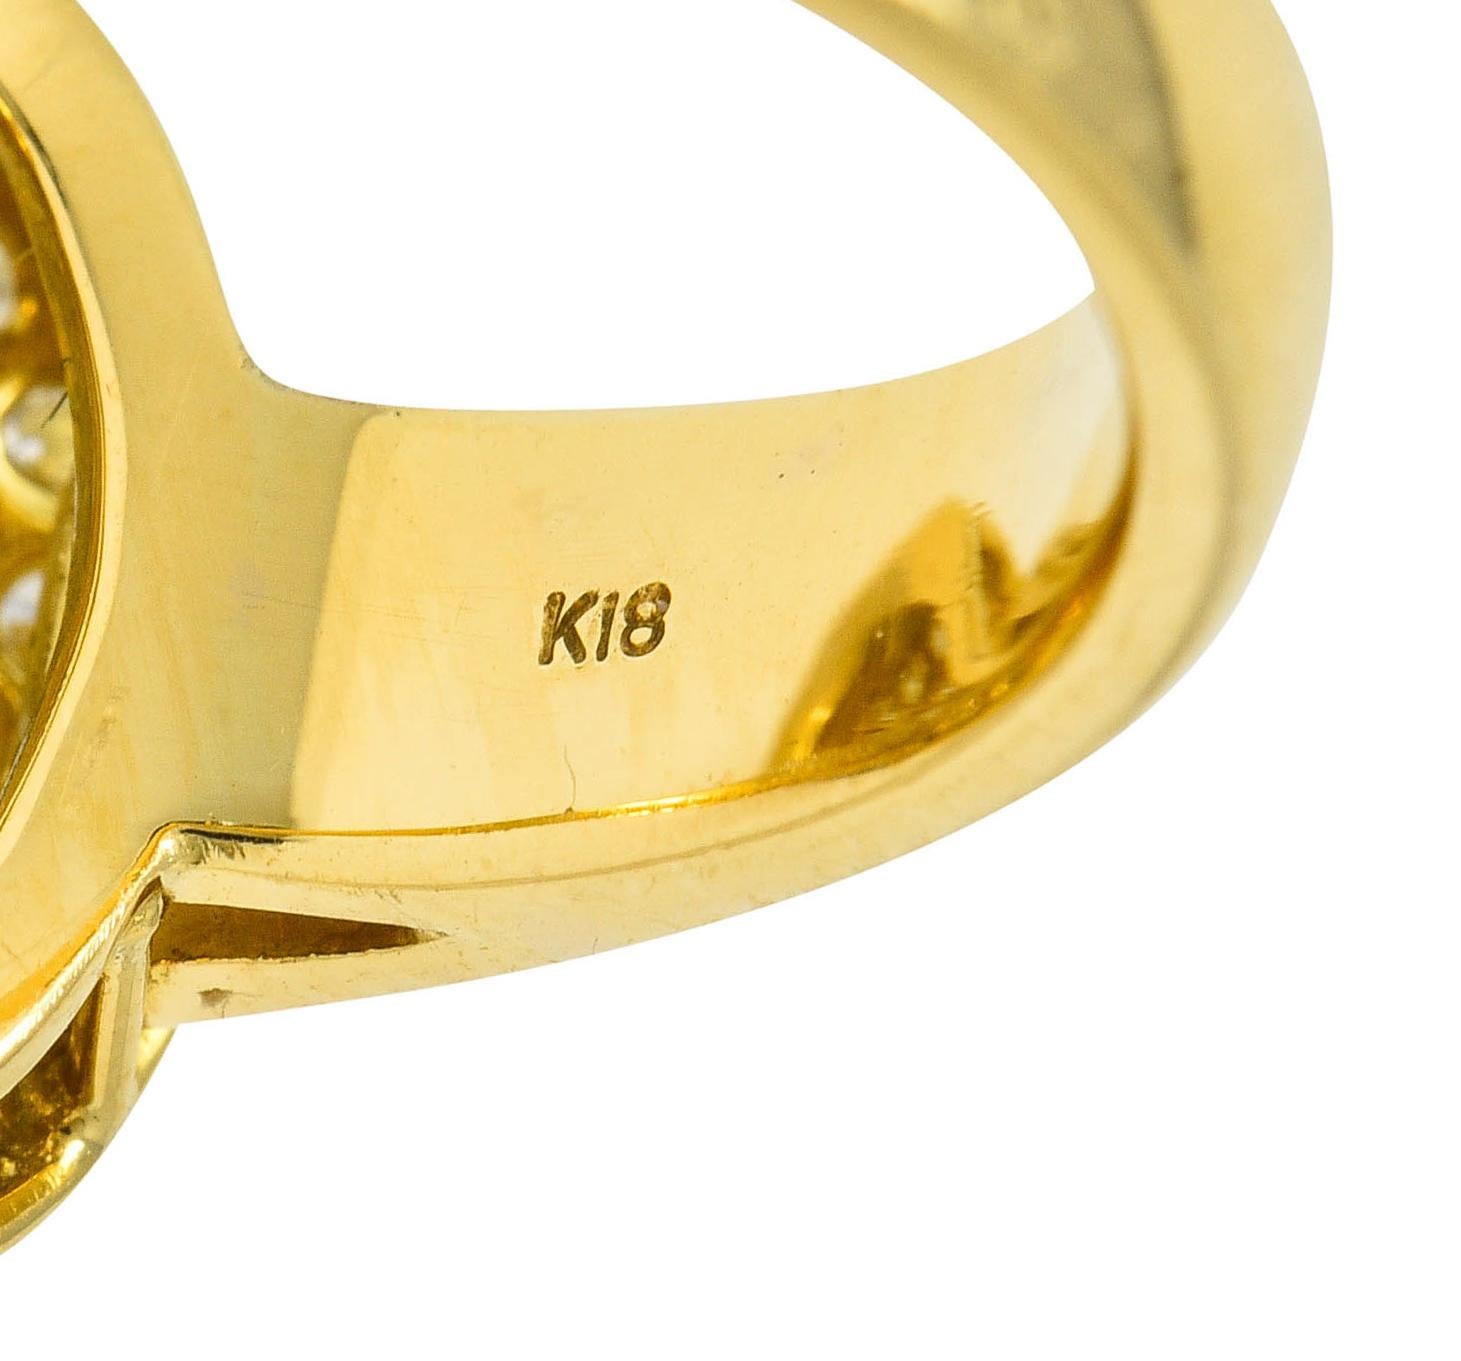 Brilliant Cut Van Cleef & Arpels Pave Diamond 18 Karat Gold Circle Band Ring